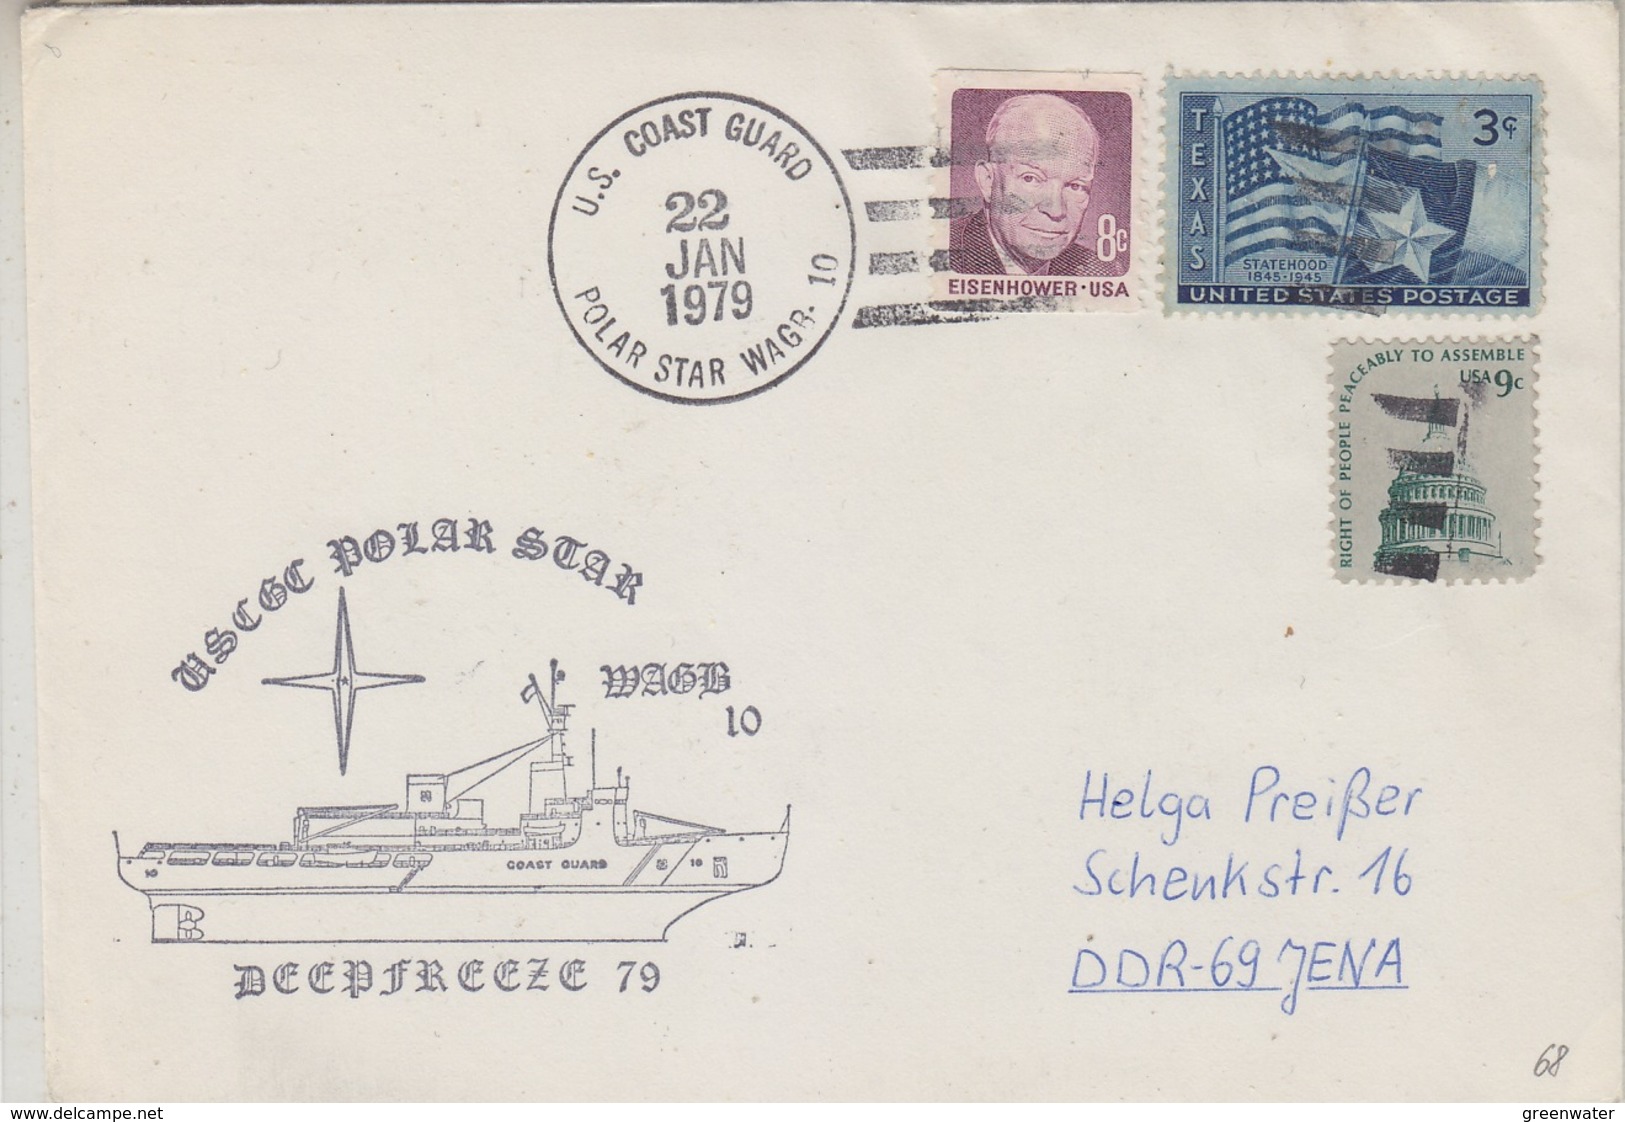 USA 1979 Deep Freeze 79 / Polar Star Cover (34219) - Polar Ships & Icebreakers